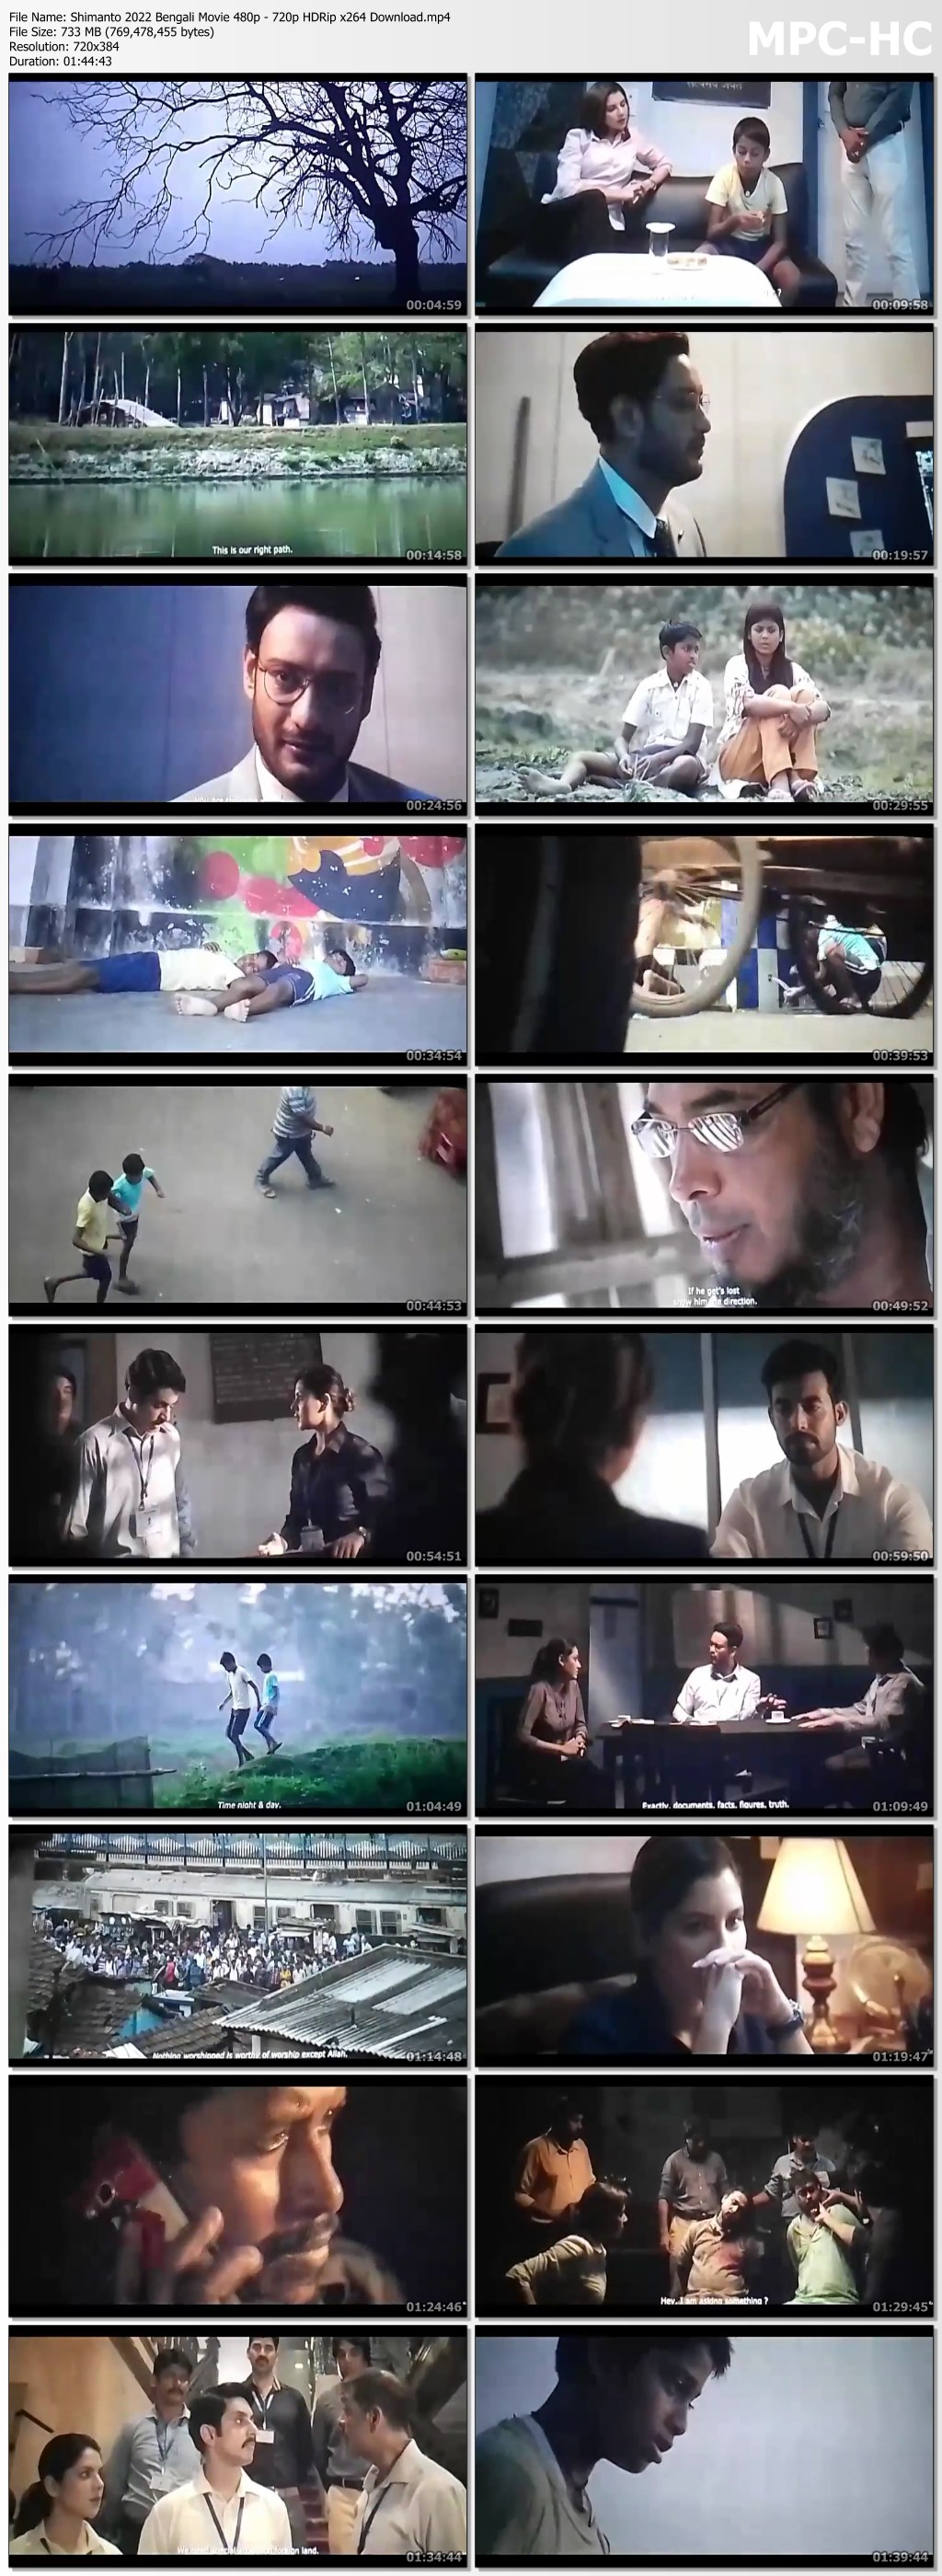 Shimanto 2022 Bengali Movie 480p 720p HDRip x264 Download.mp4 thumbs